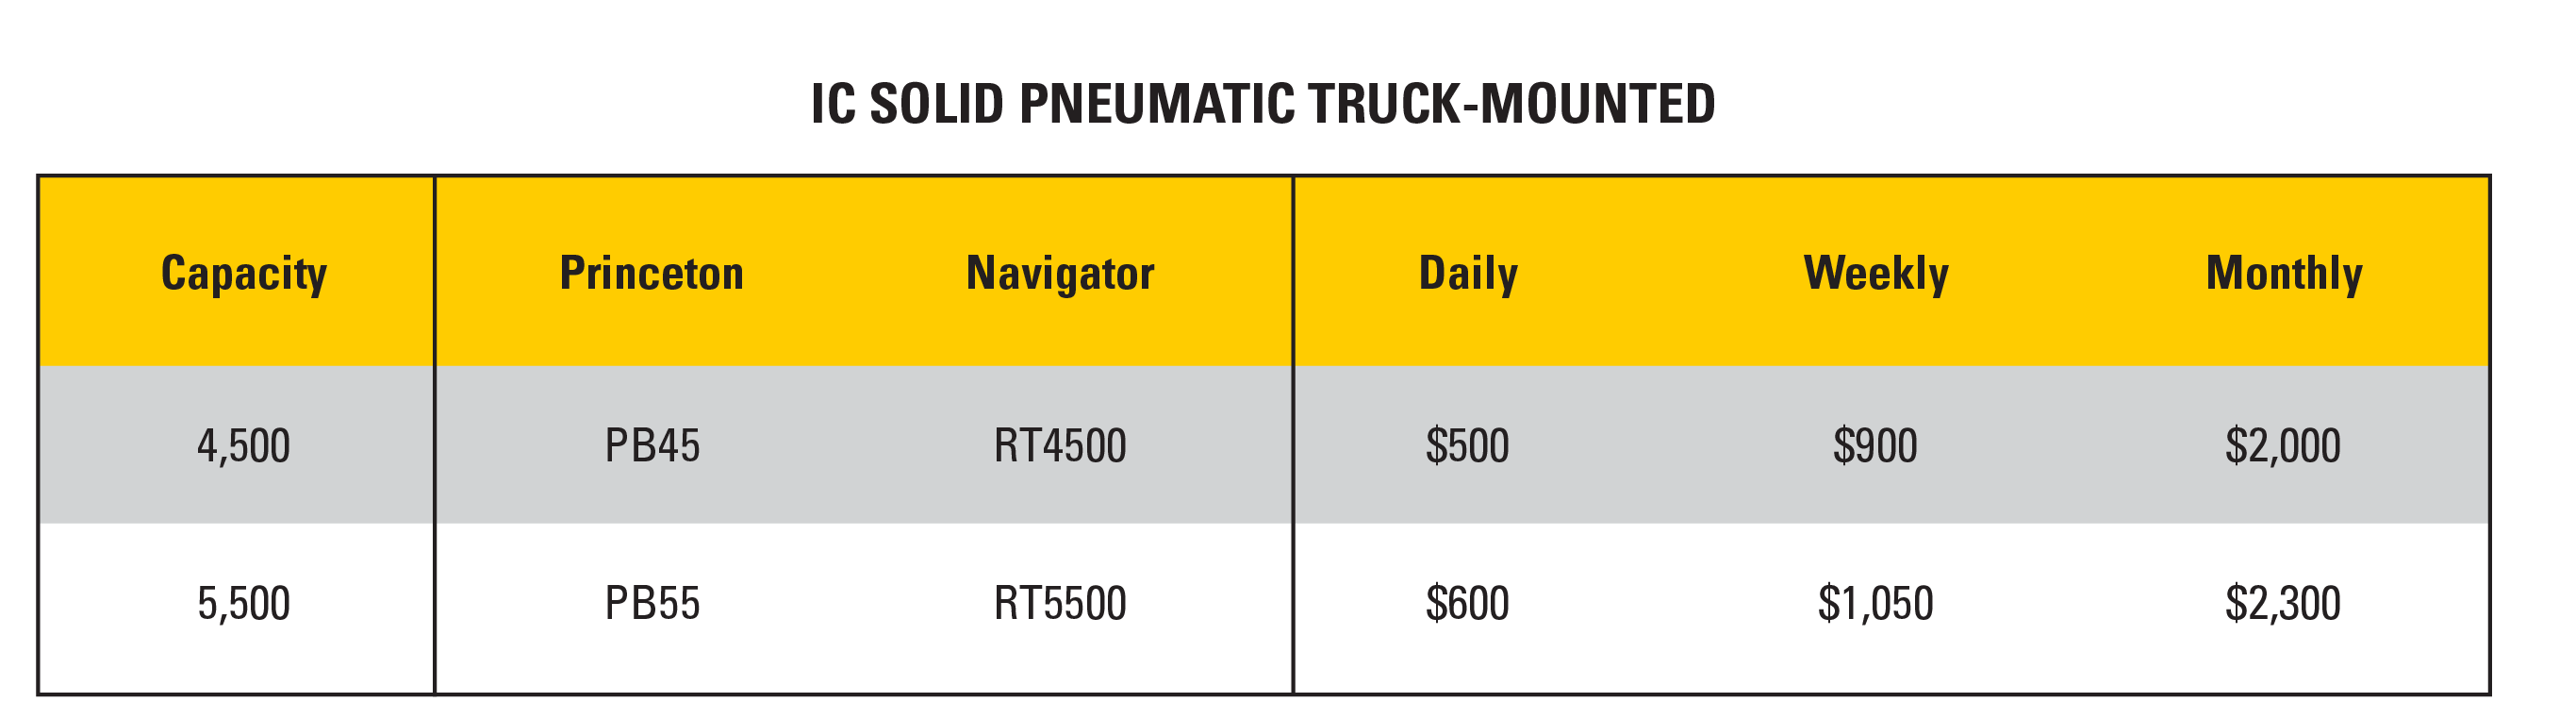 Rental rates for Class 7 pneumatic forklift trucks